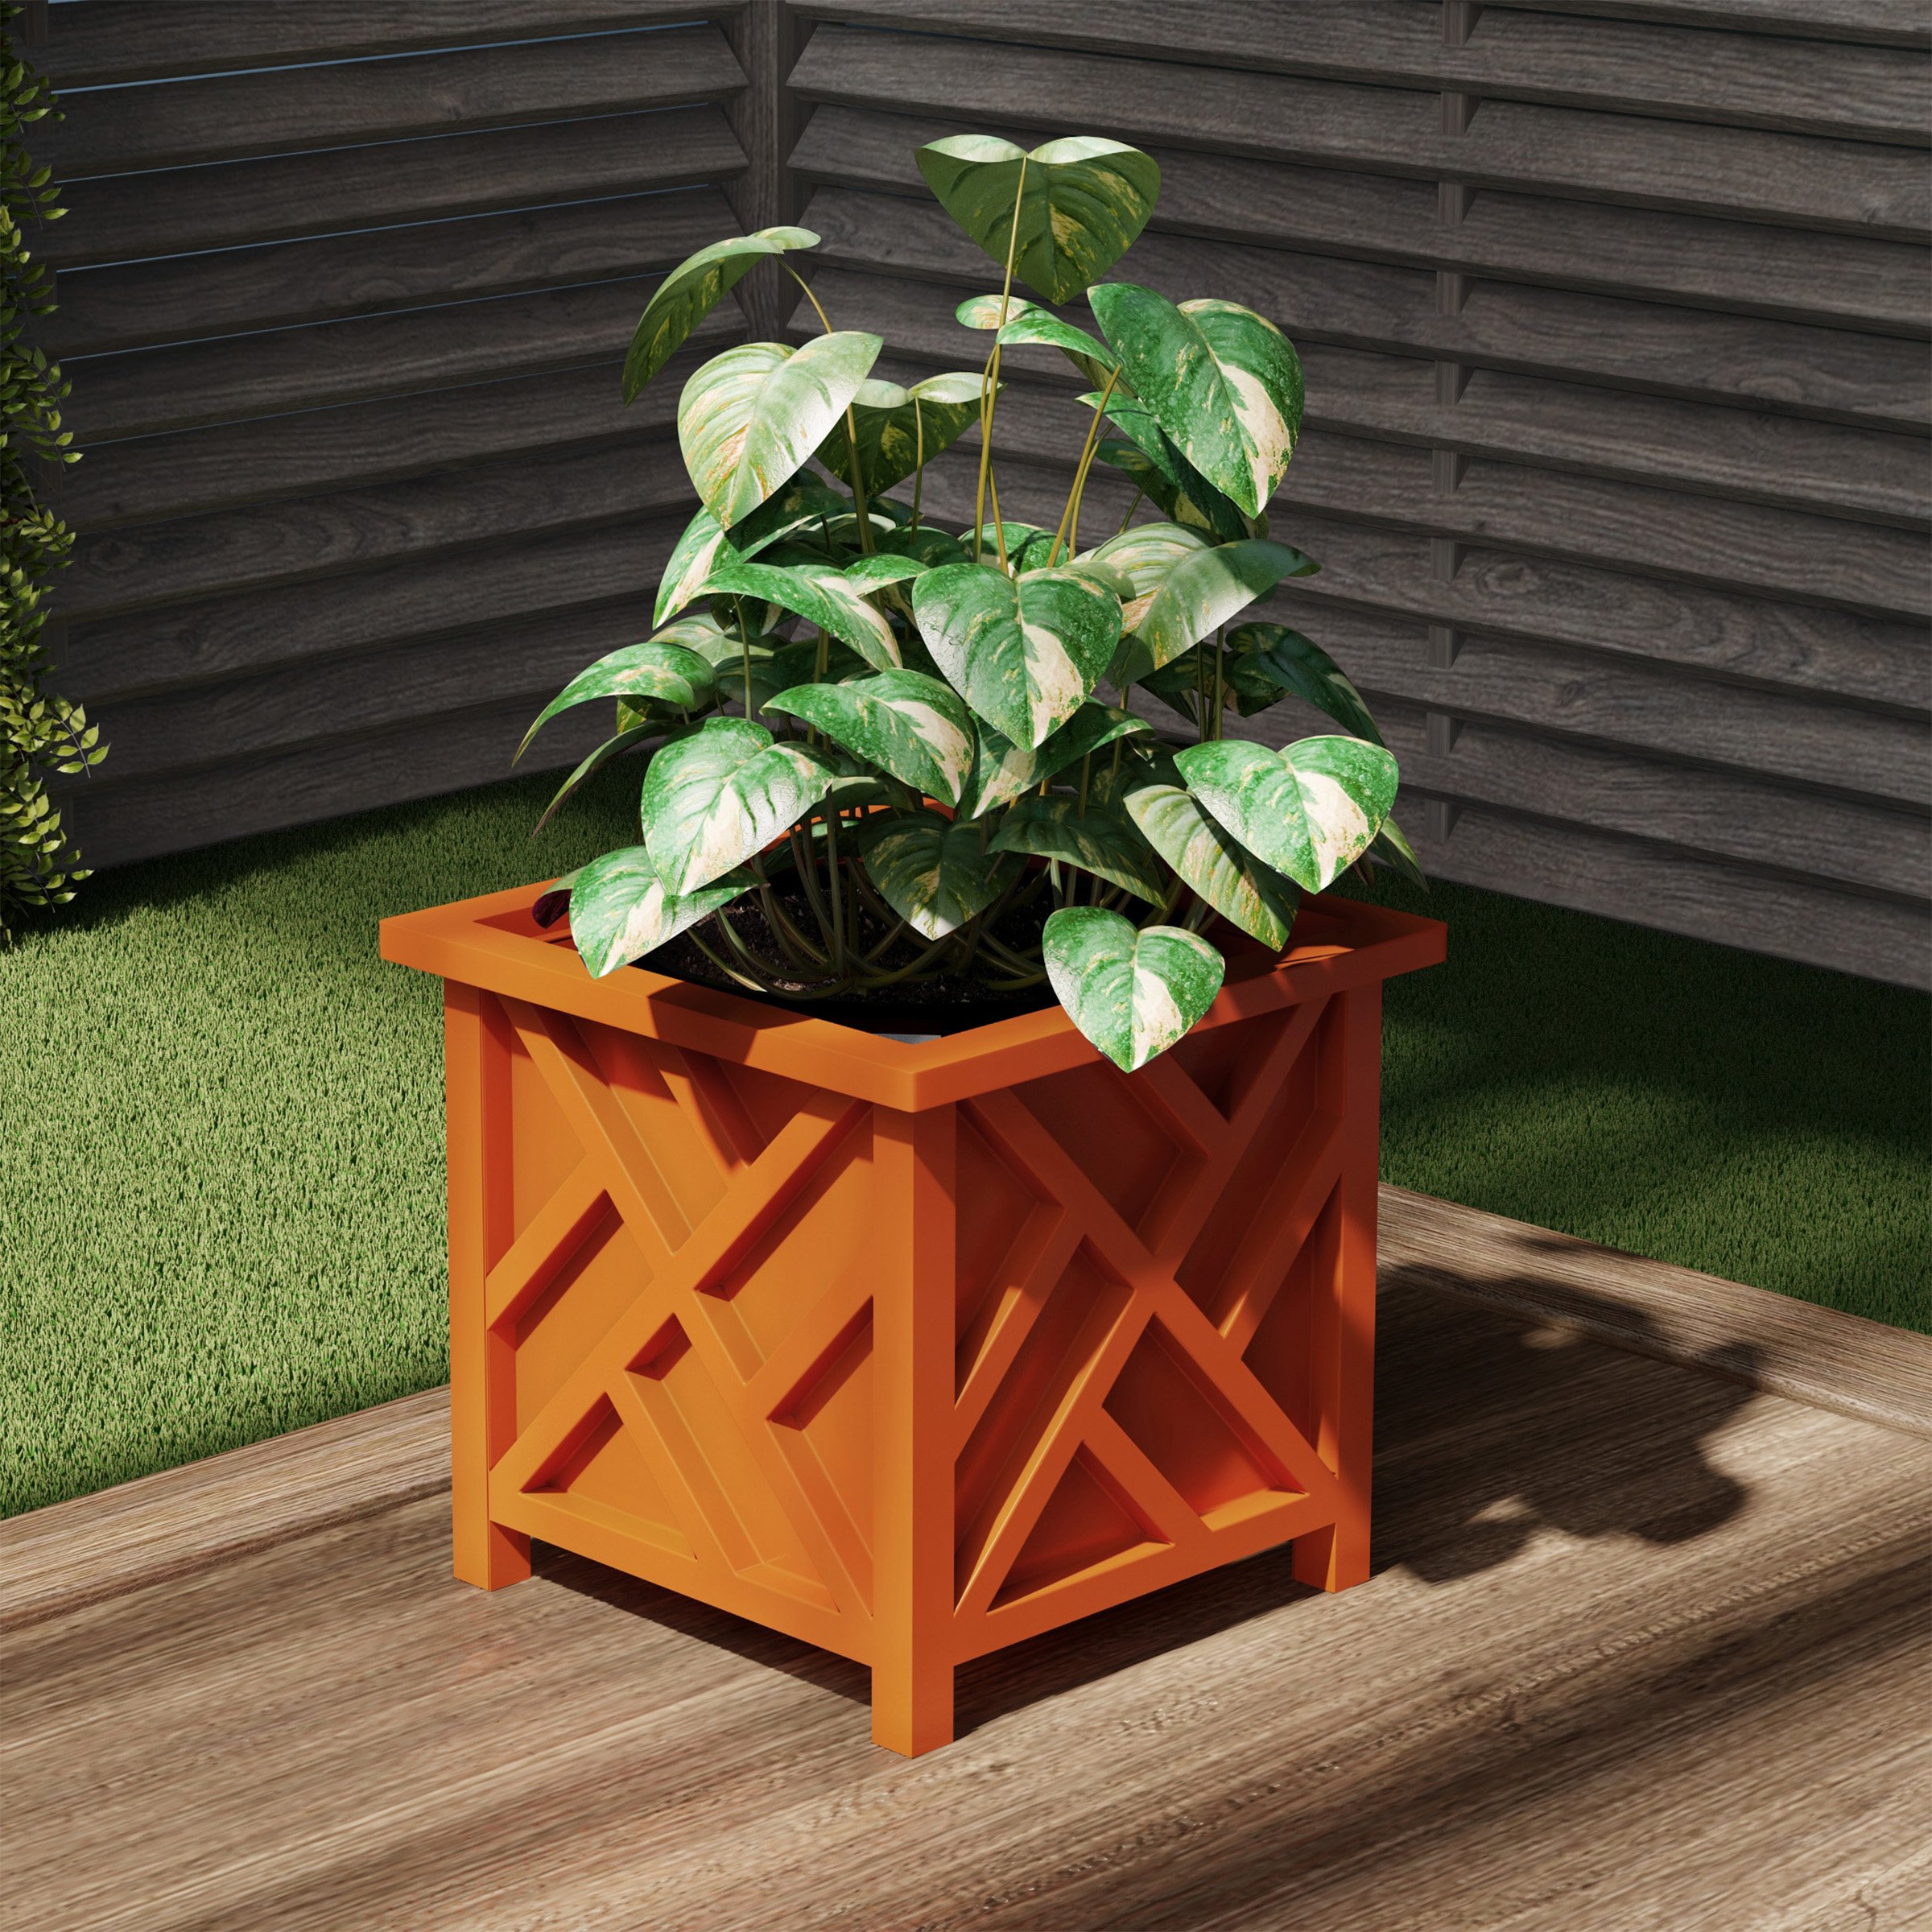 Square Planter Box- Black Lattice Container For Flowers & Plants Bottom Insert Holds Soil Outdoor Pot For Garden Patio - Black